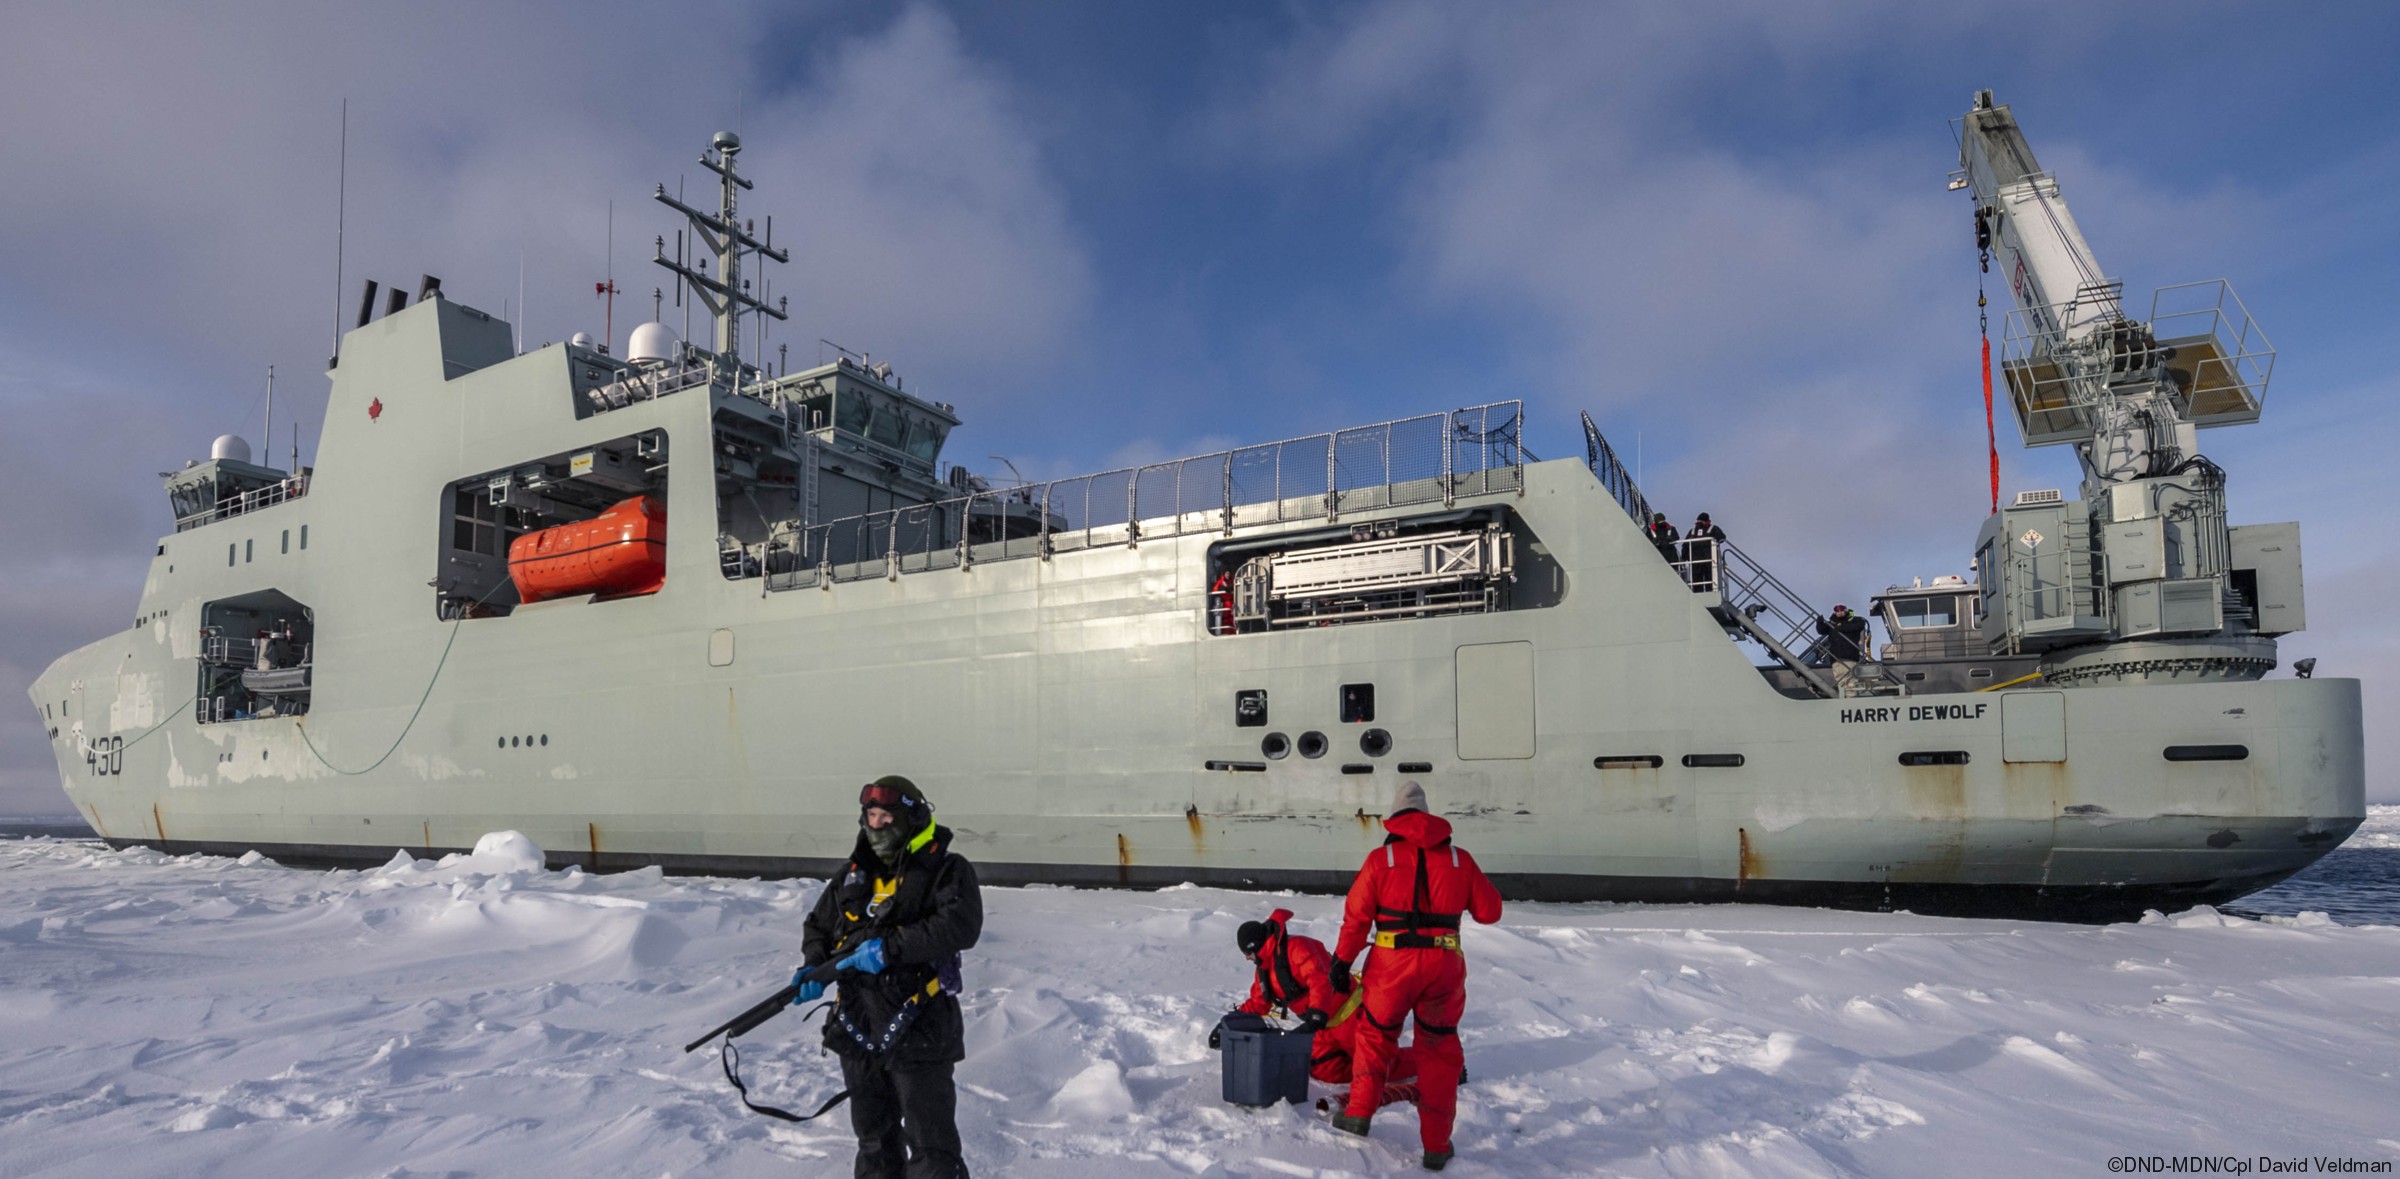 aopv-430 hmcs harry dewolf arctic offshore patrol vessel ncsm royal canadian navy 10